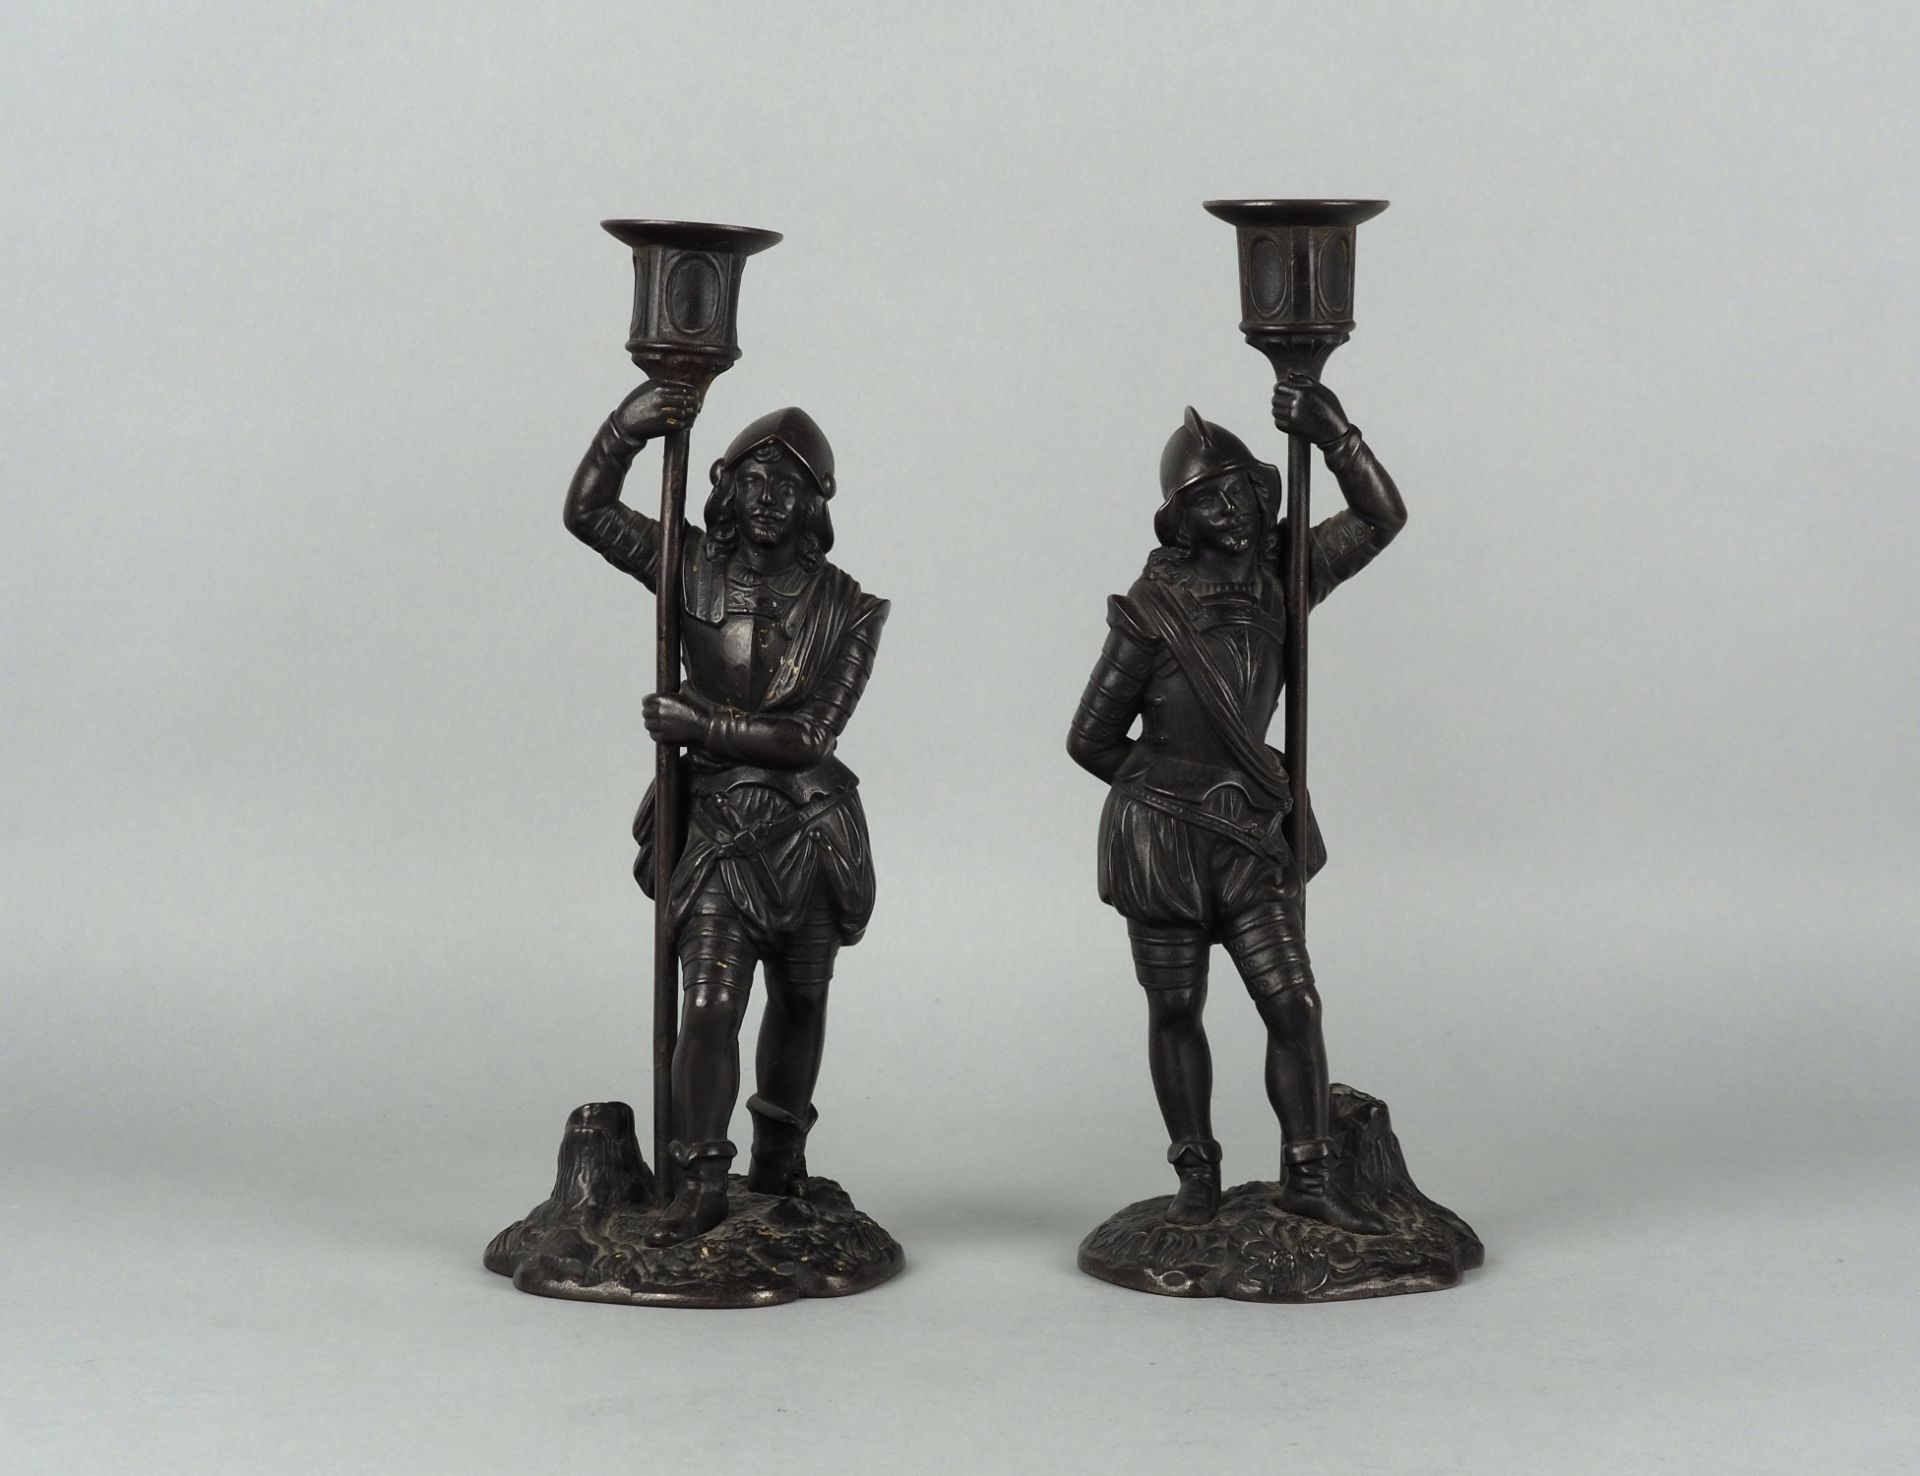 Pair of guardian sculptures as candlesticks made of cast iron, around 1850